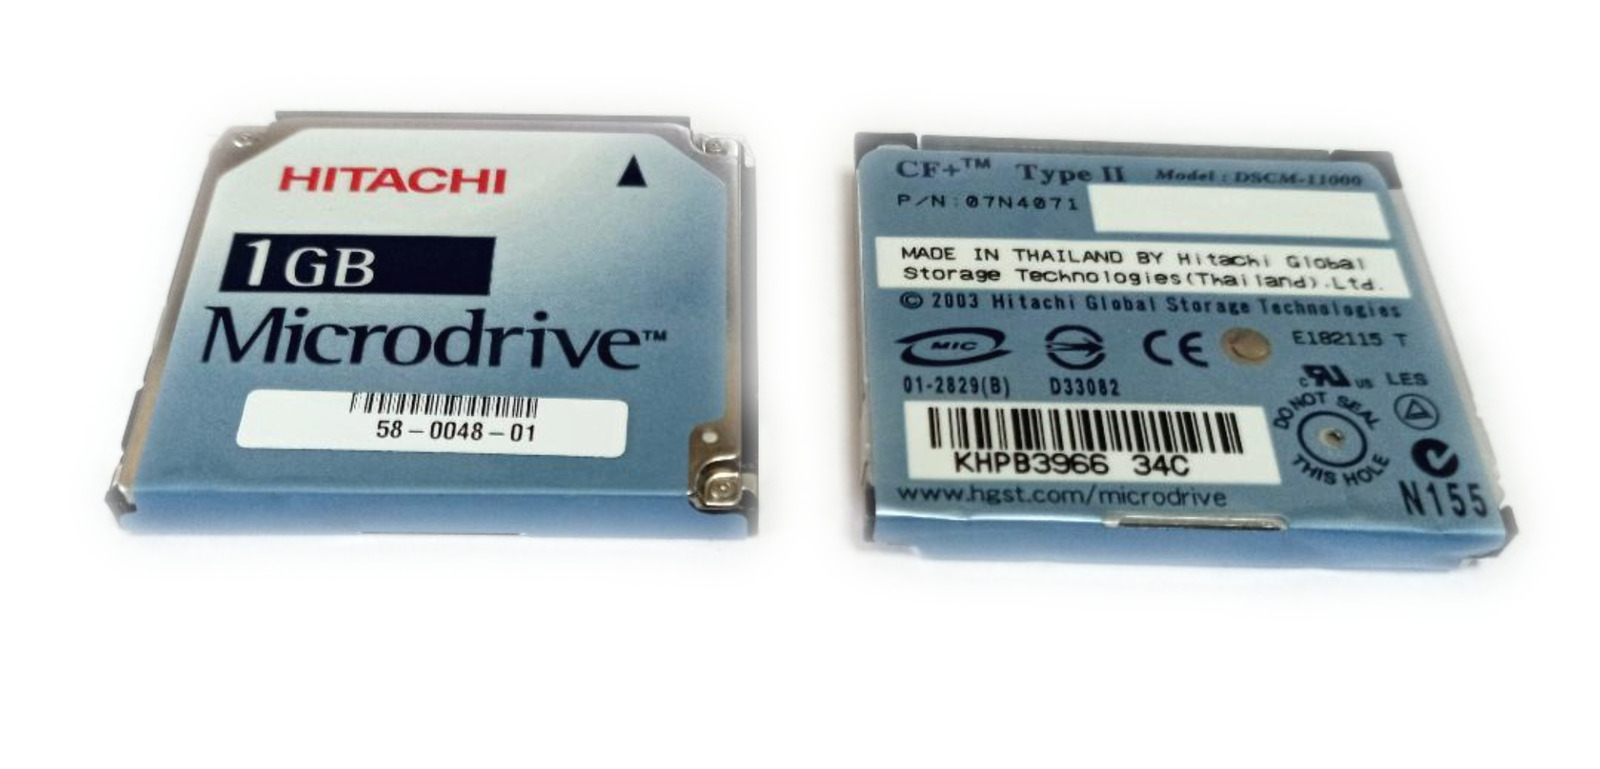 DSCM-11000 Hard Disk Drives HDDs 1Gbyte CF+ Type II 59.9MBps 128Kbyte 1GB Mic ro